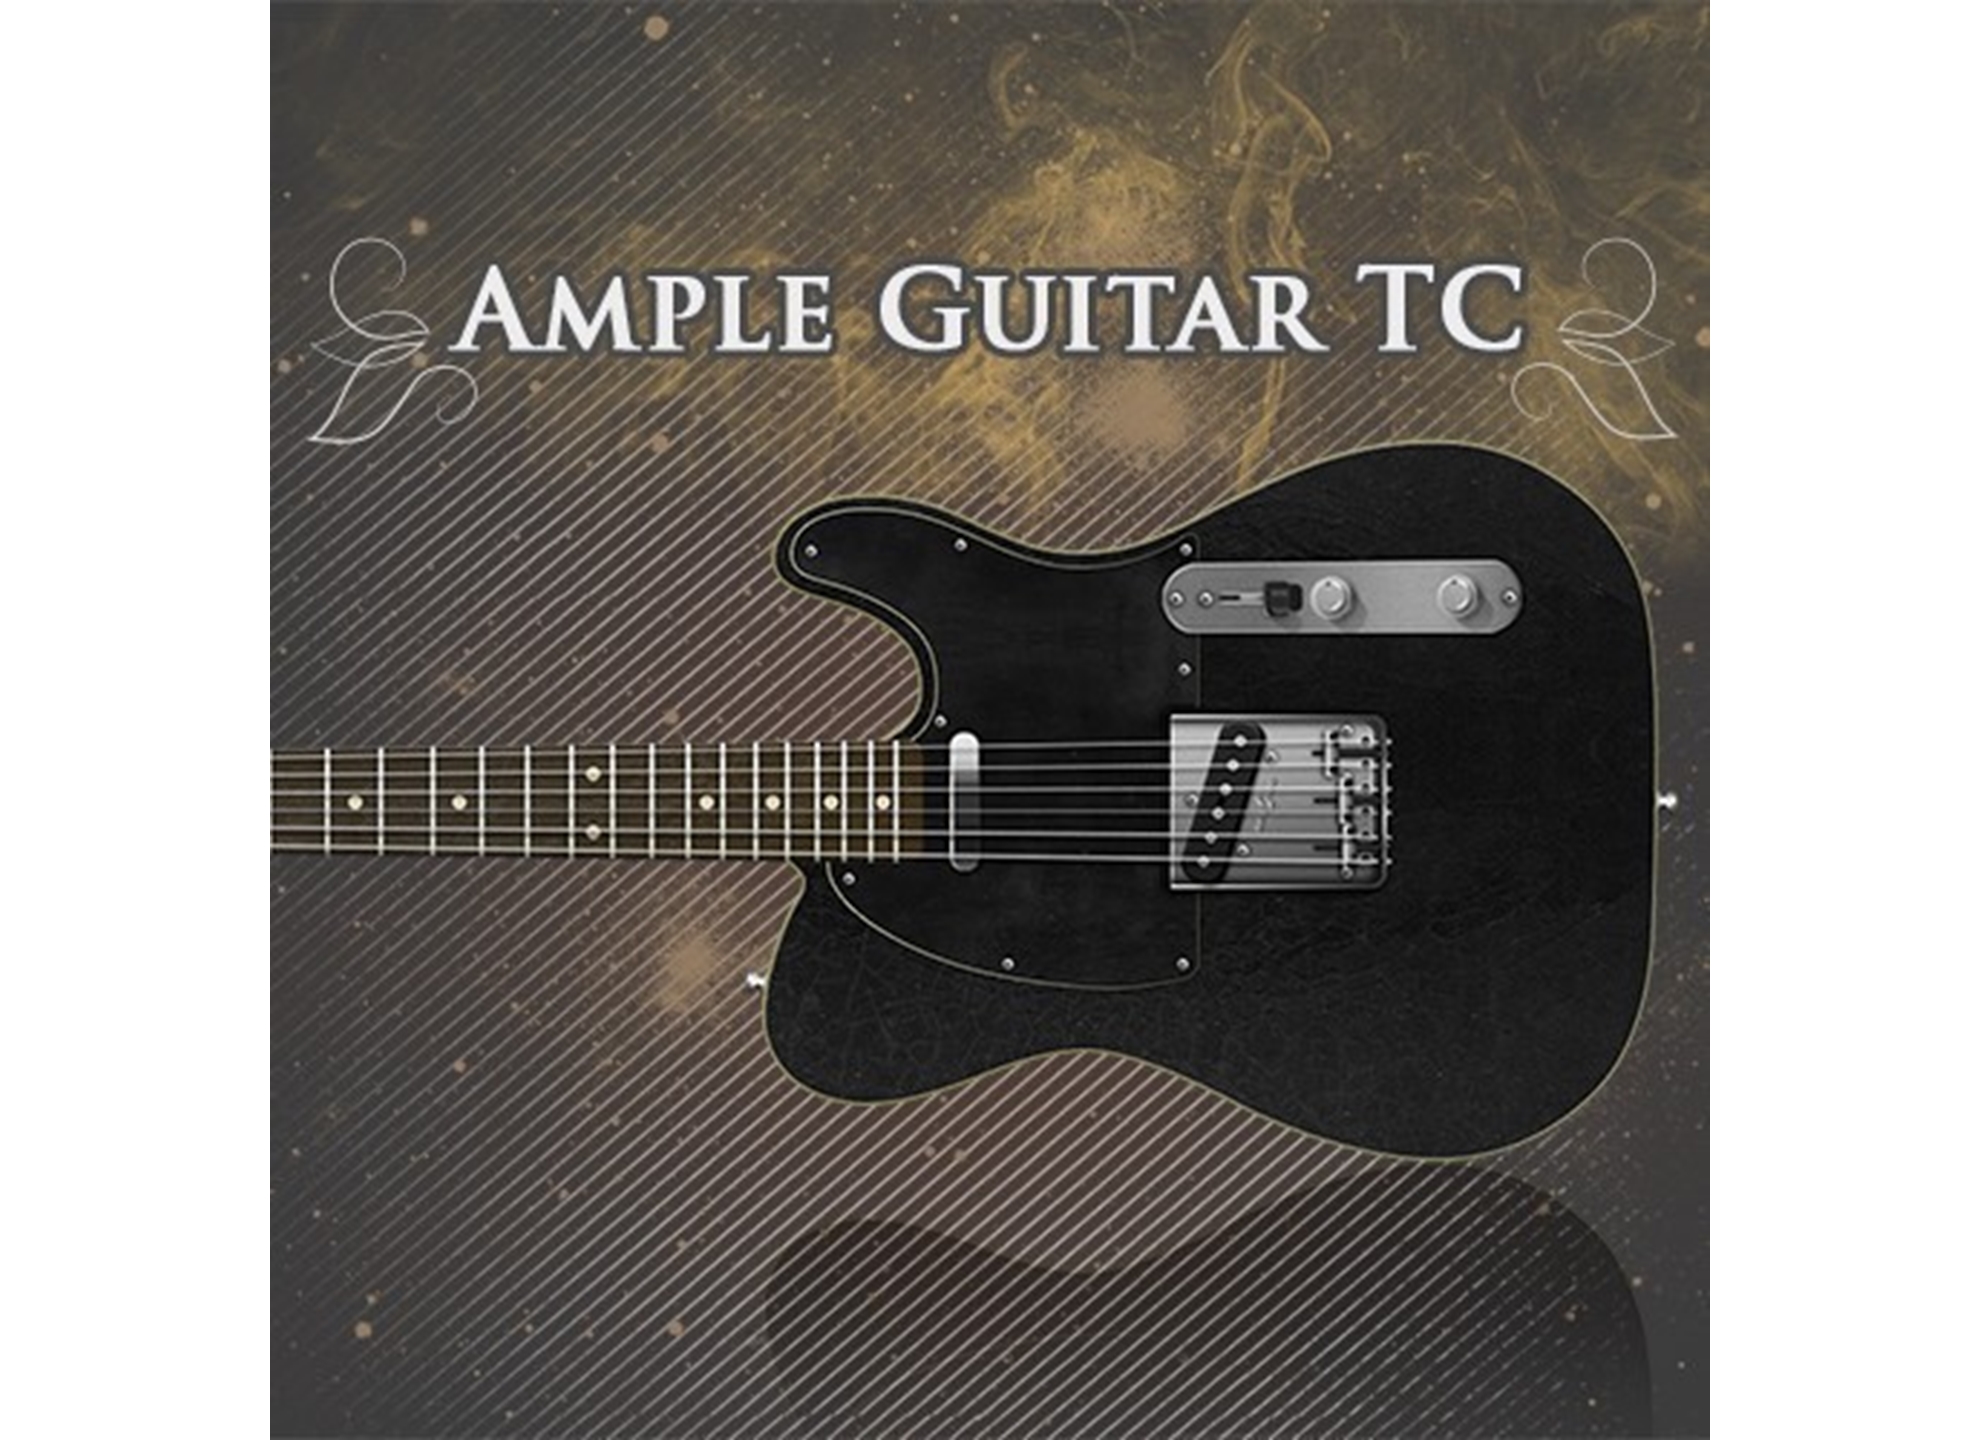 Ample Guitar TC